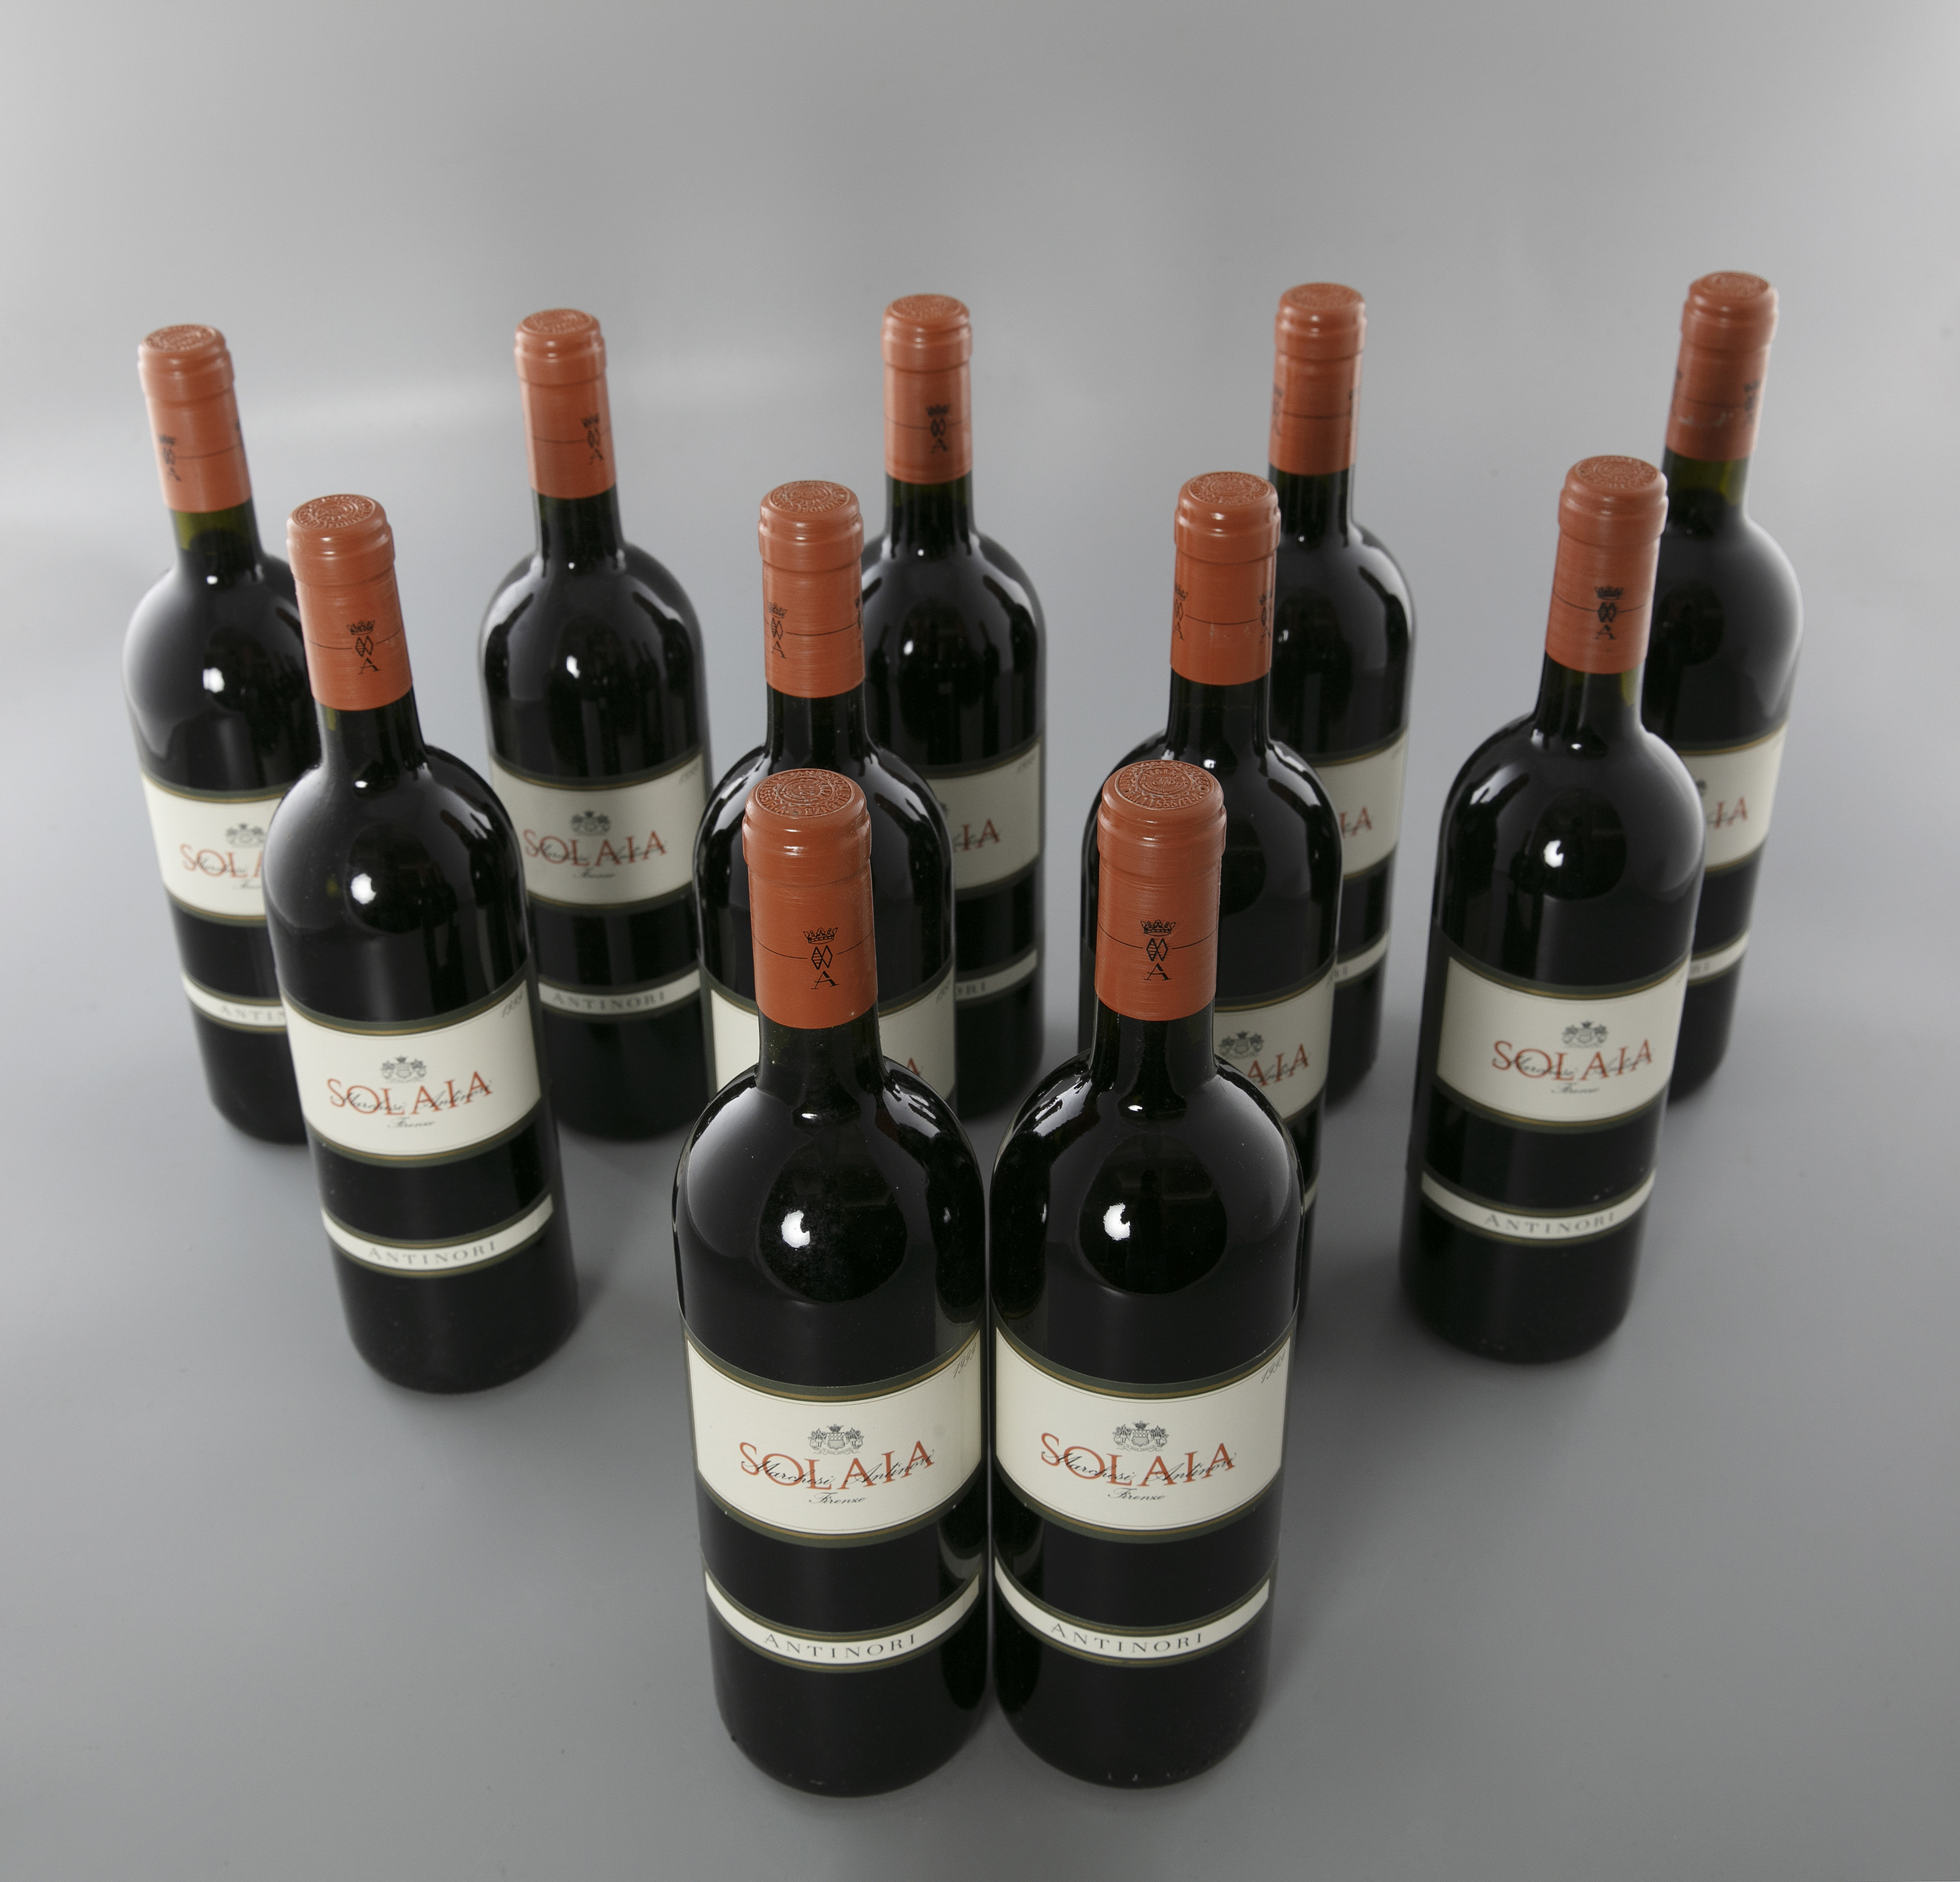 Antinori Solaia Toscana 1999 11 bottles (two cases) - Image 3 of 3